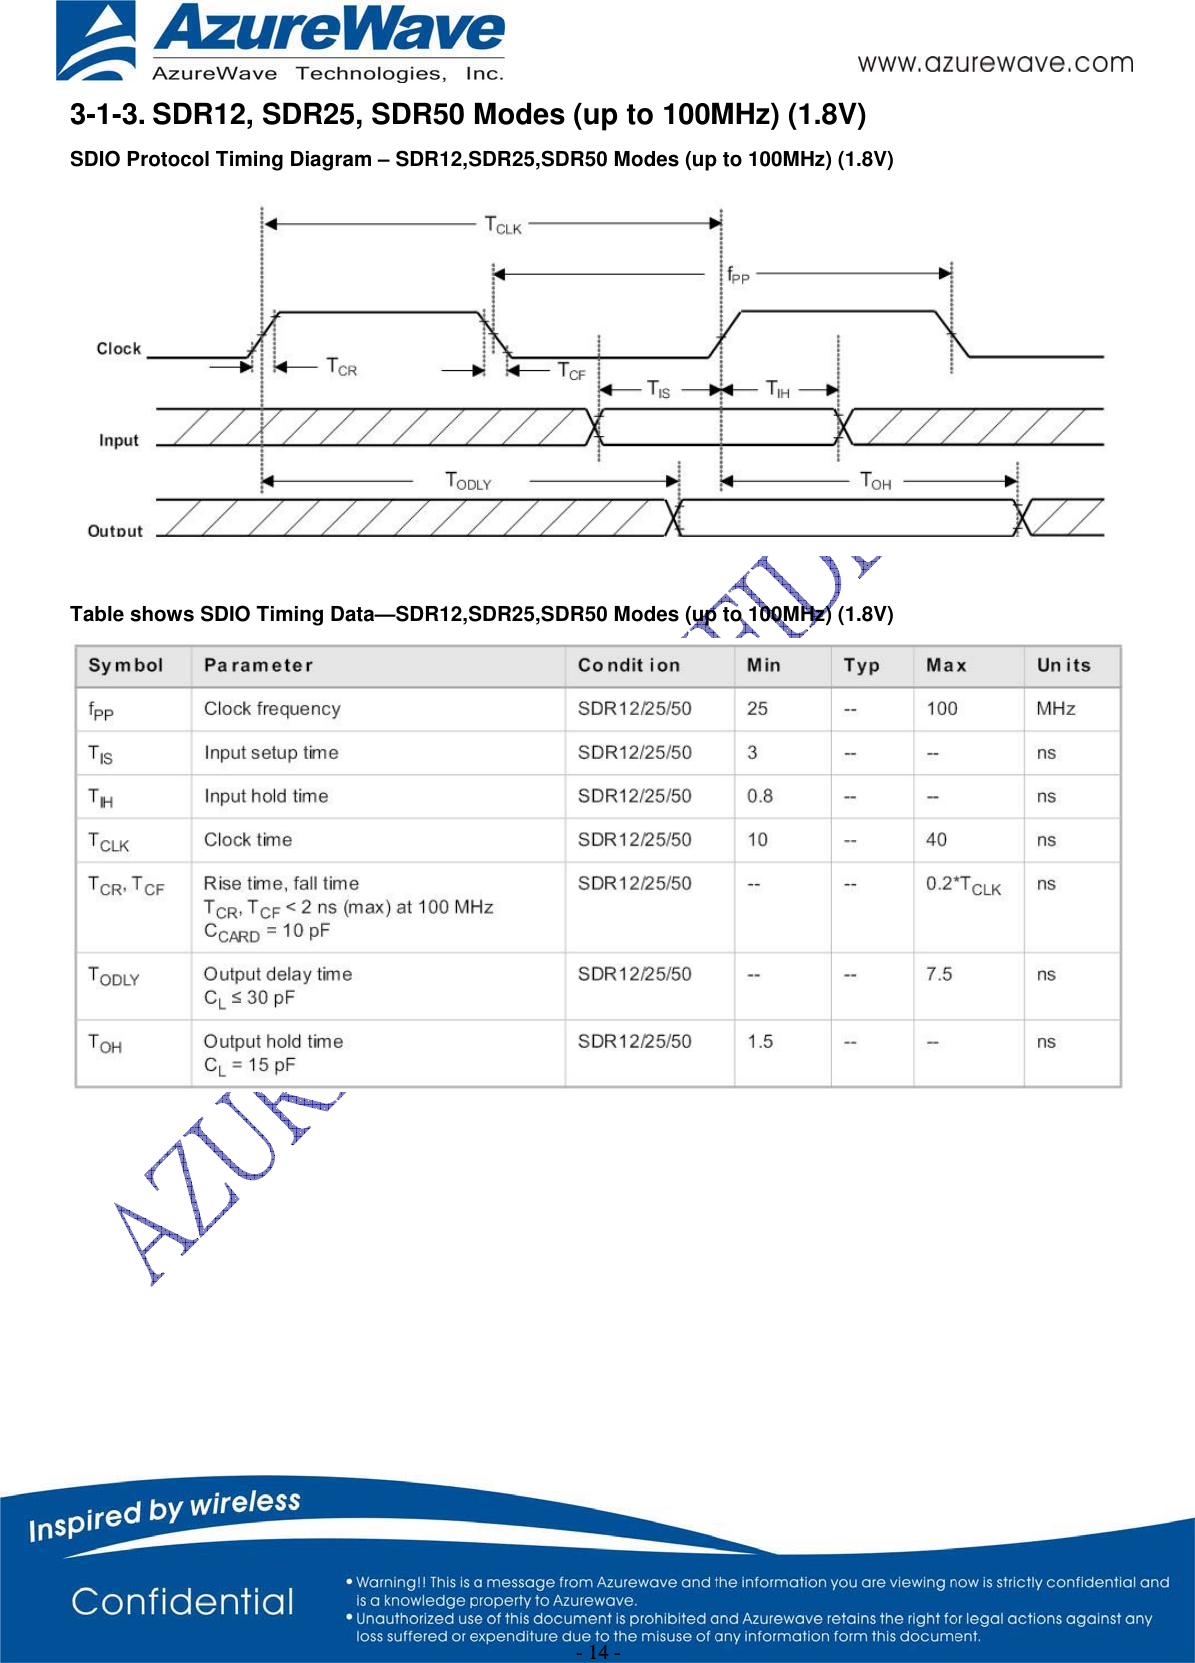 - 14 - 3-1-3. SDR12, SDR25, SDR50 Modes (up to 100MHz) (1.8V) SDIO Protocol Timing Diagram – SDR12,SDR25,SDR50 Modes (up to 100MHz) (1.8V) Table shows SDIO Timing Data—SDR12,SDR25,SDR50 Modes (up to 100MHz) (1.8V) 